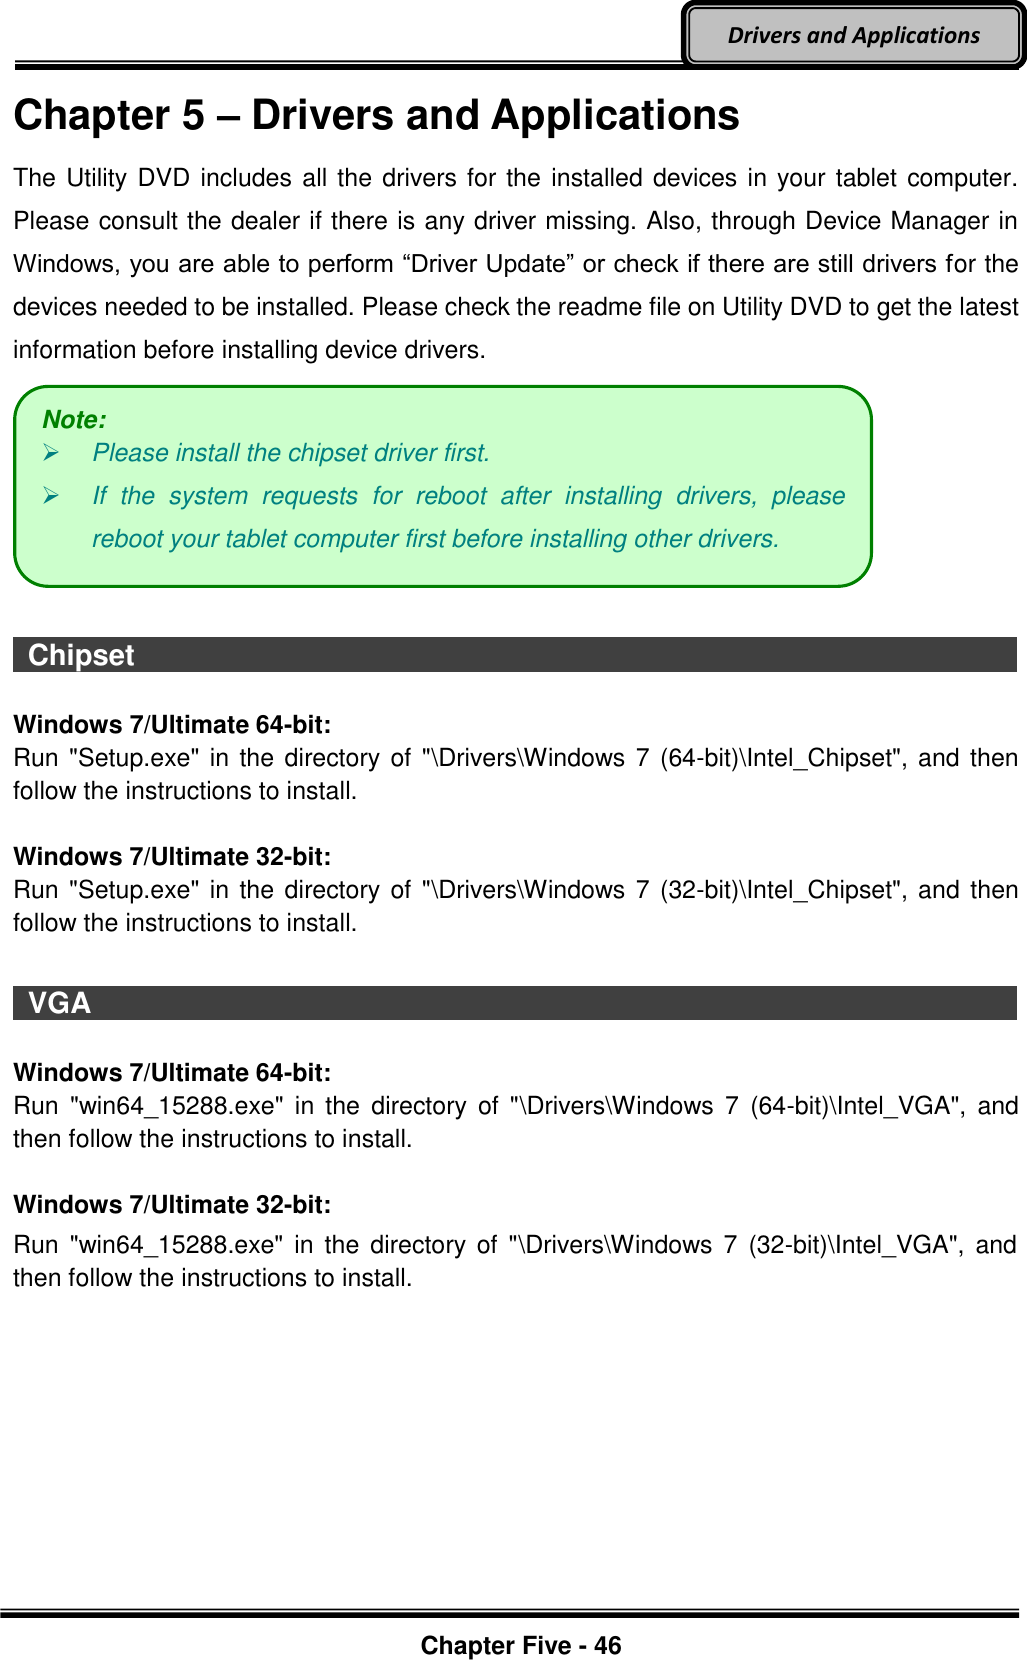 Vga drivers for windows 7 ultimate 32 bit